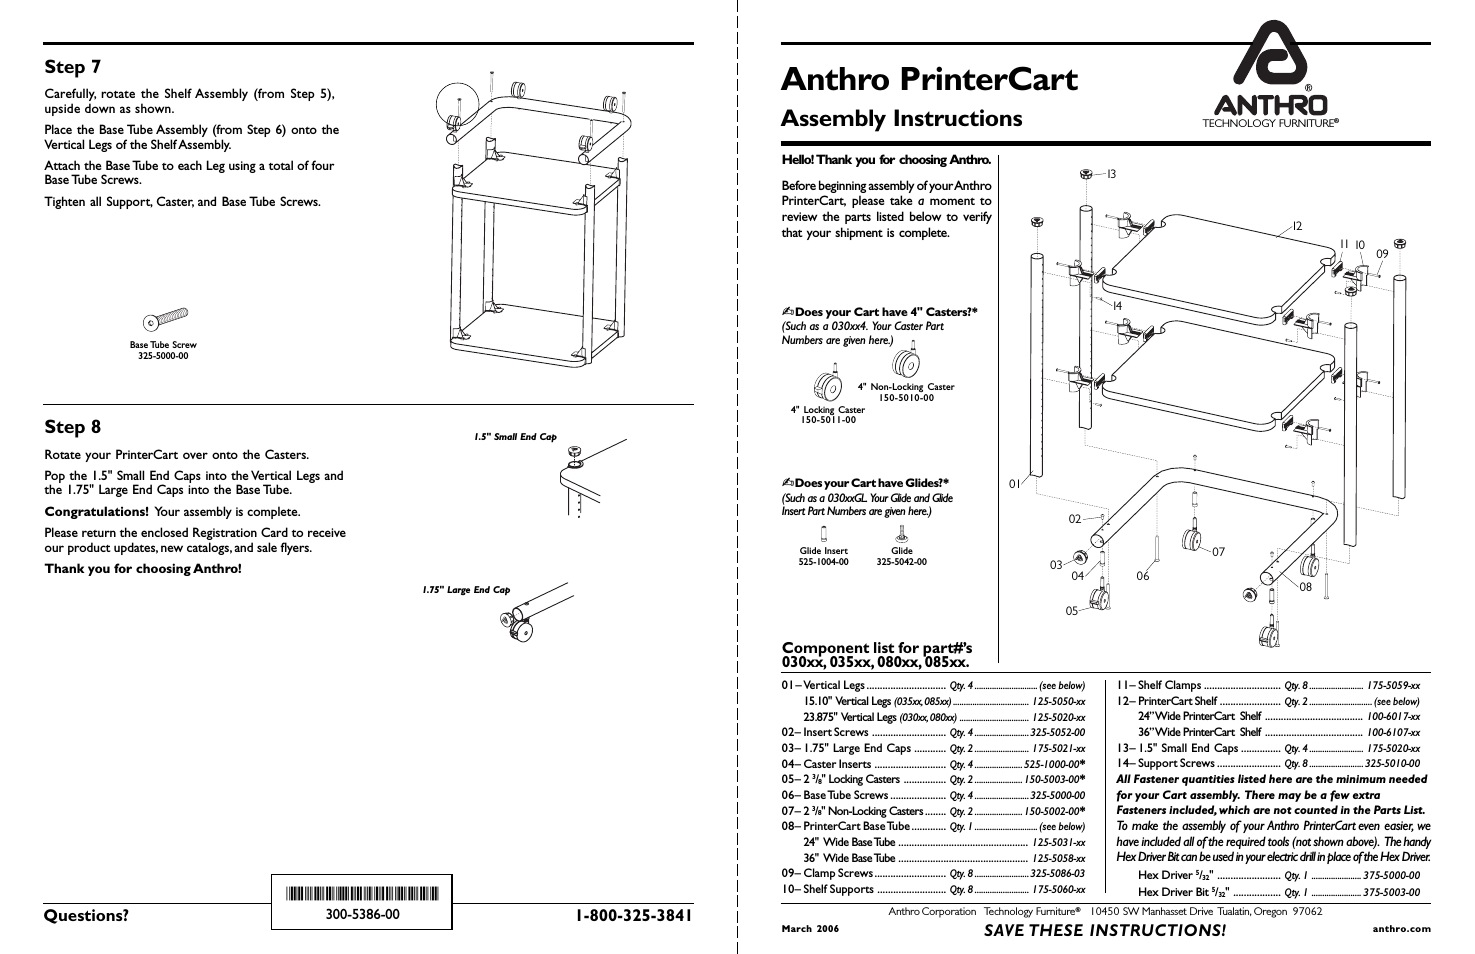 PrinterCart 20H & 28H Assembly Instructions